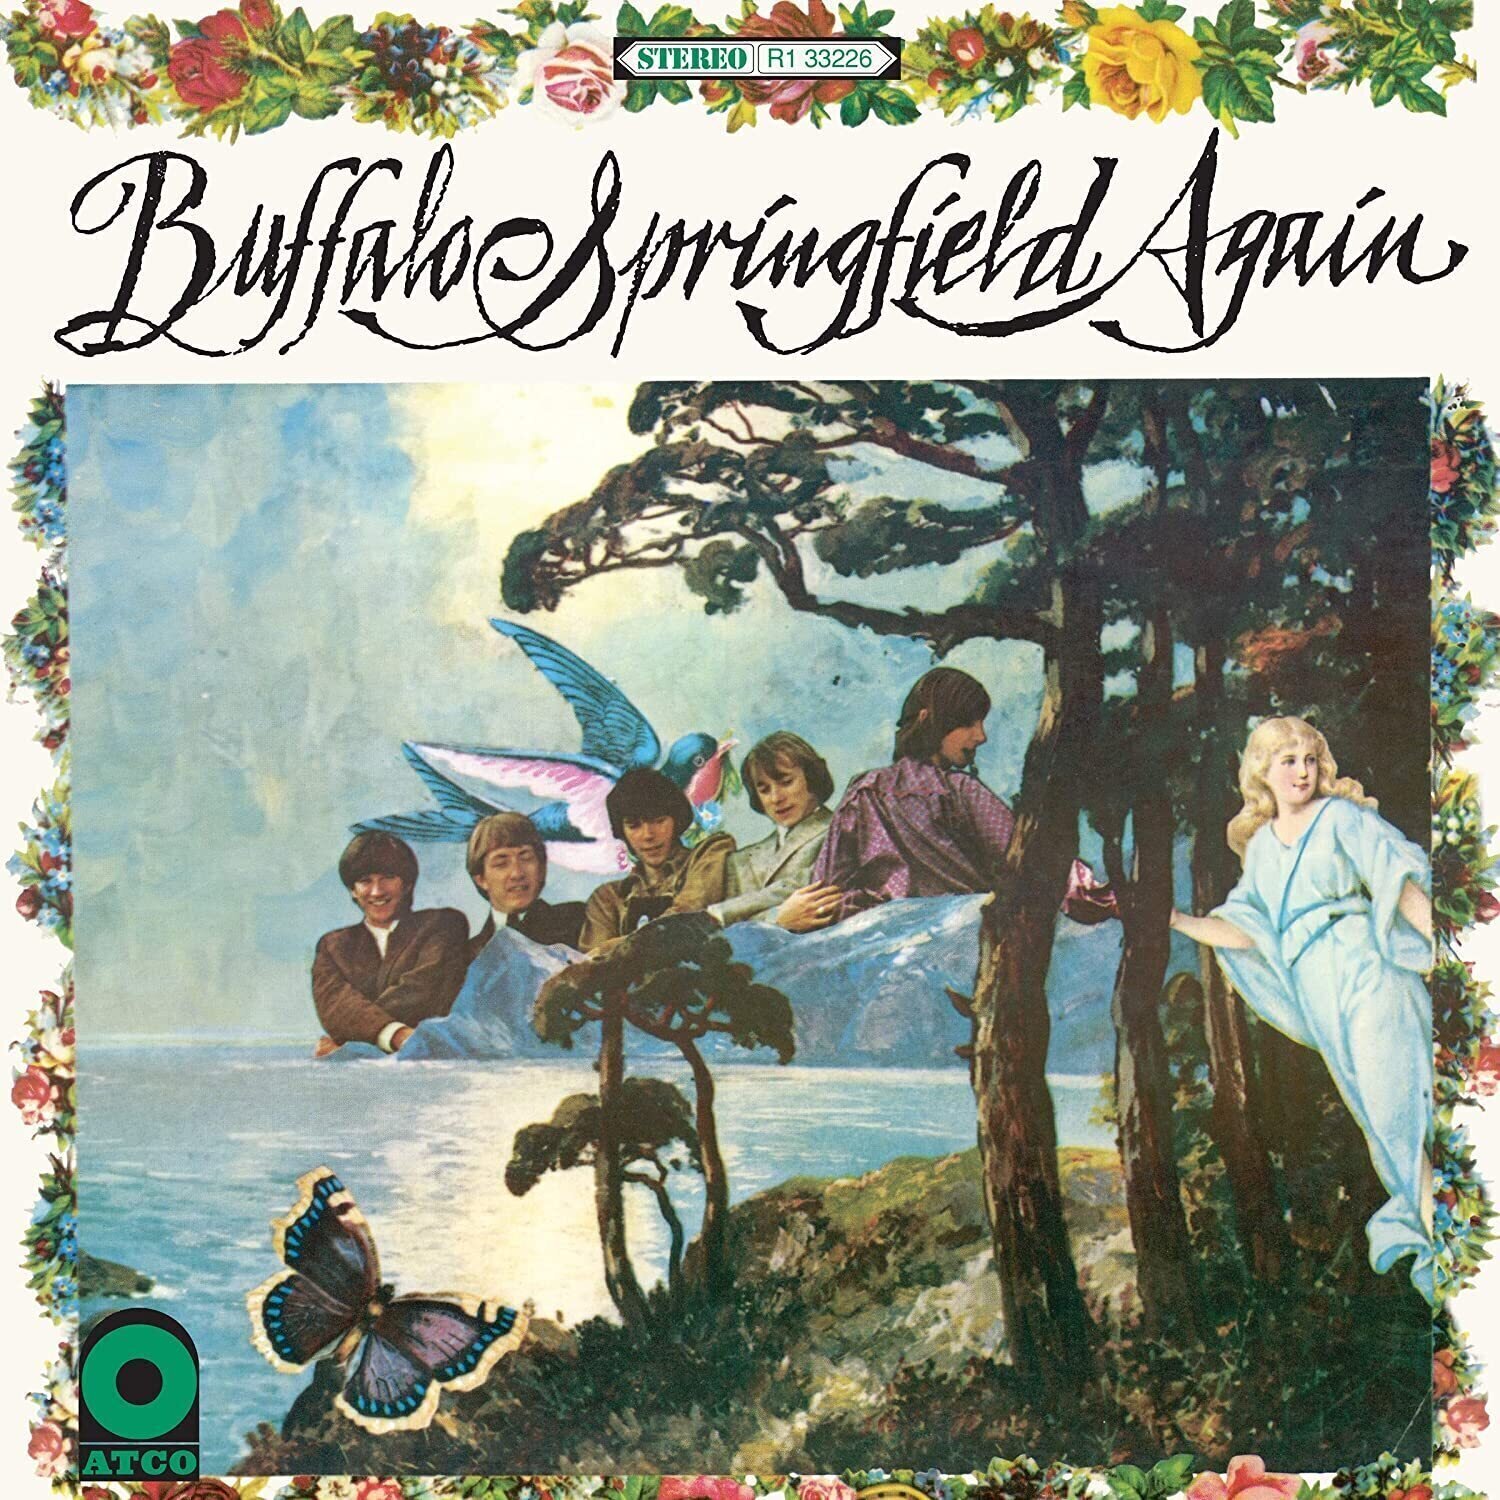 LP Buffalo Springfield - Buffalo Springfield Again (LP)